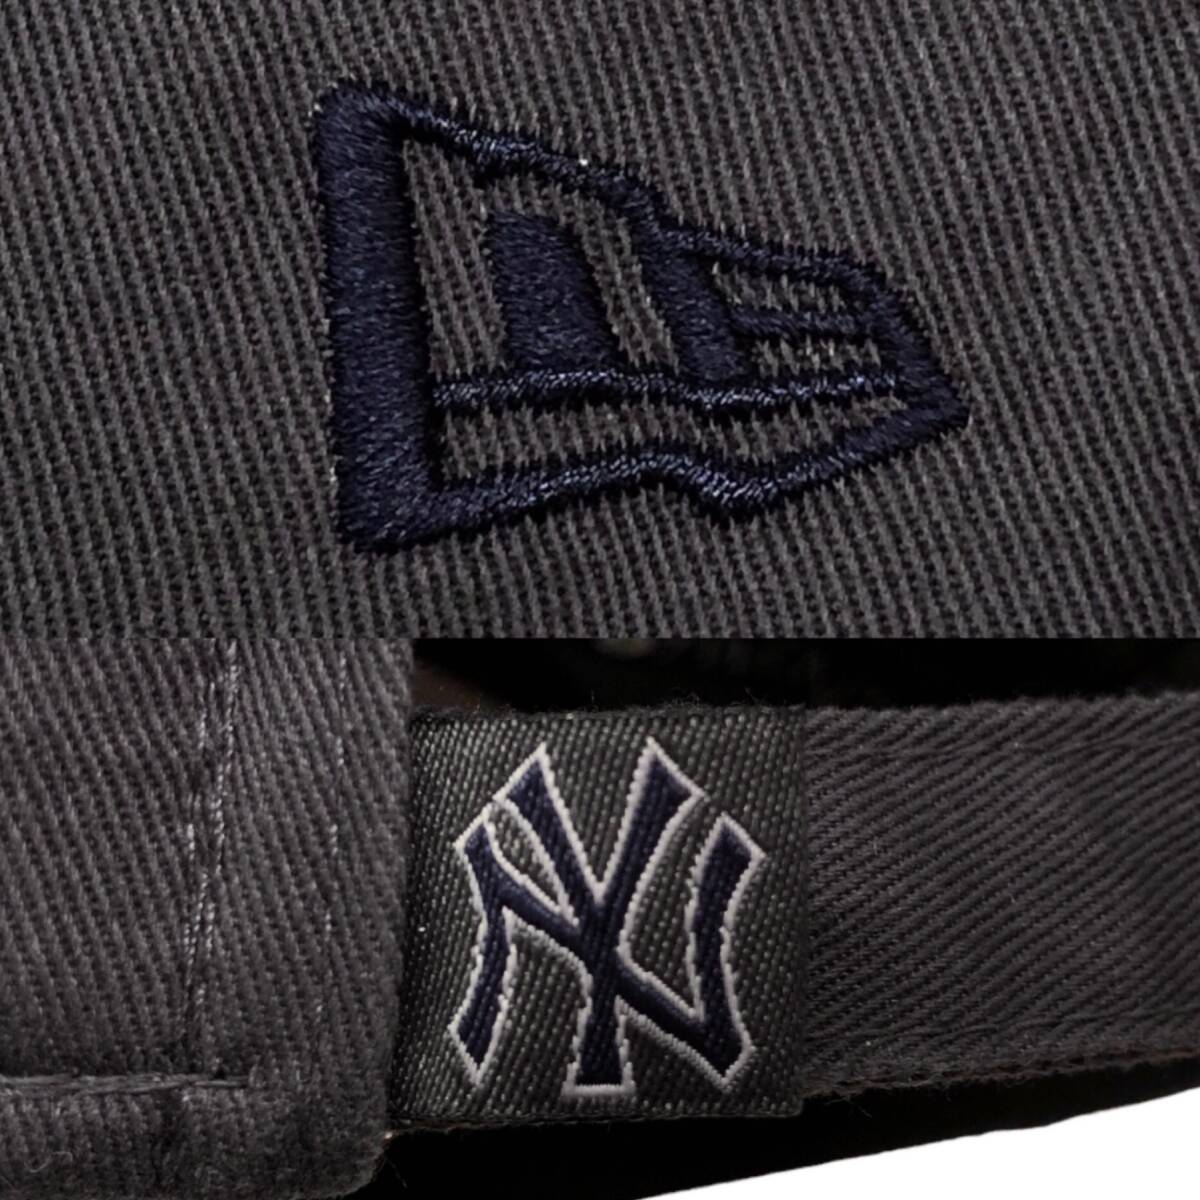 NEWERA ( New Era ) MLB CORE CLASSIC CAP NEW YORK YANKEES New York *yan Keith cap gray wi men's /025